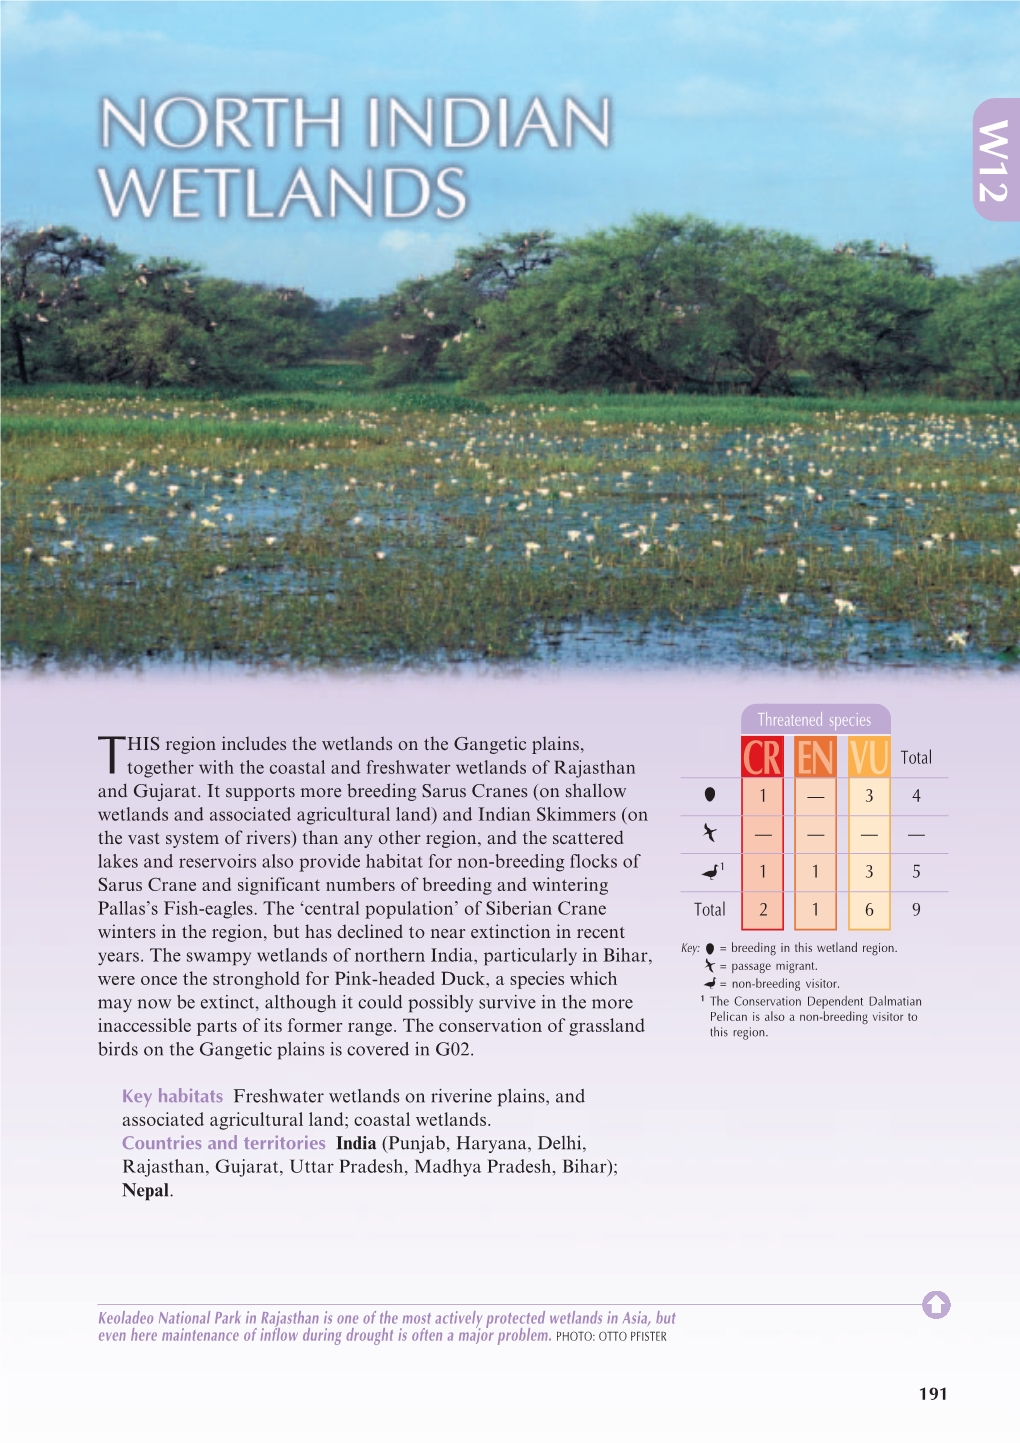 North Indian Wetlands (PDF, 455